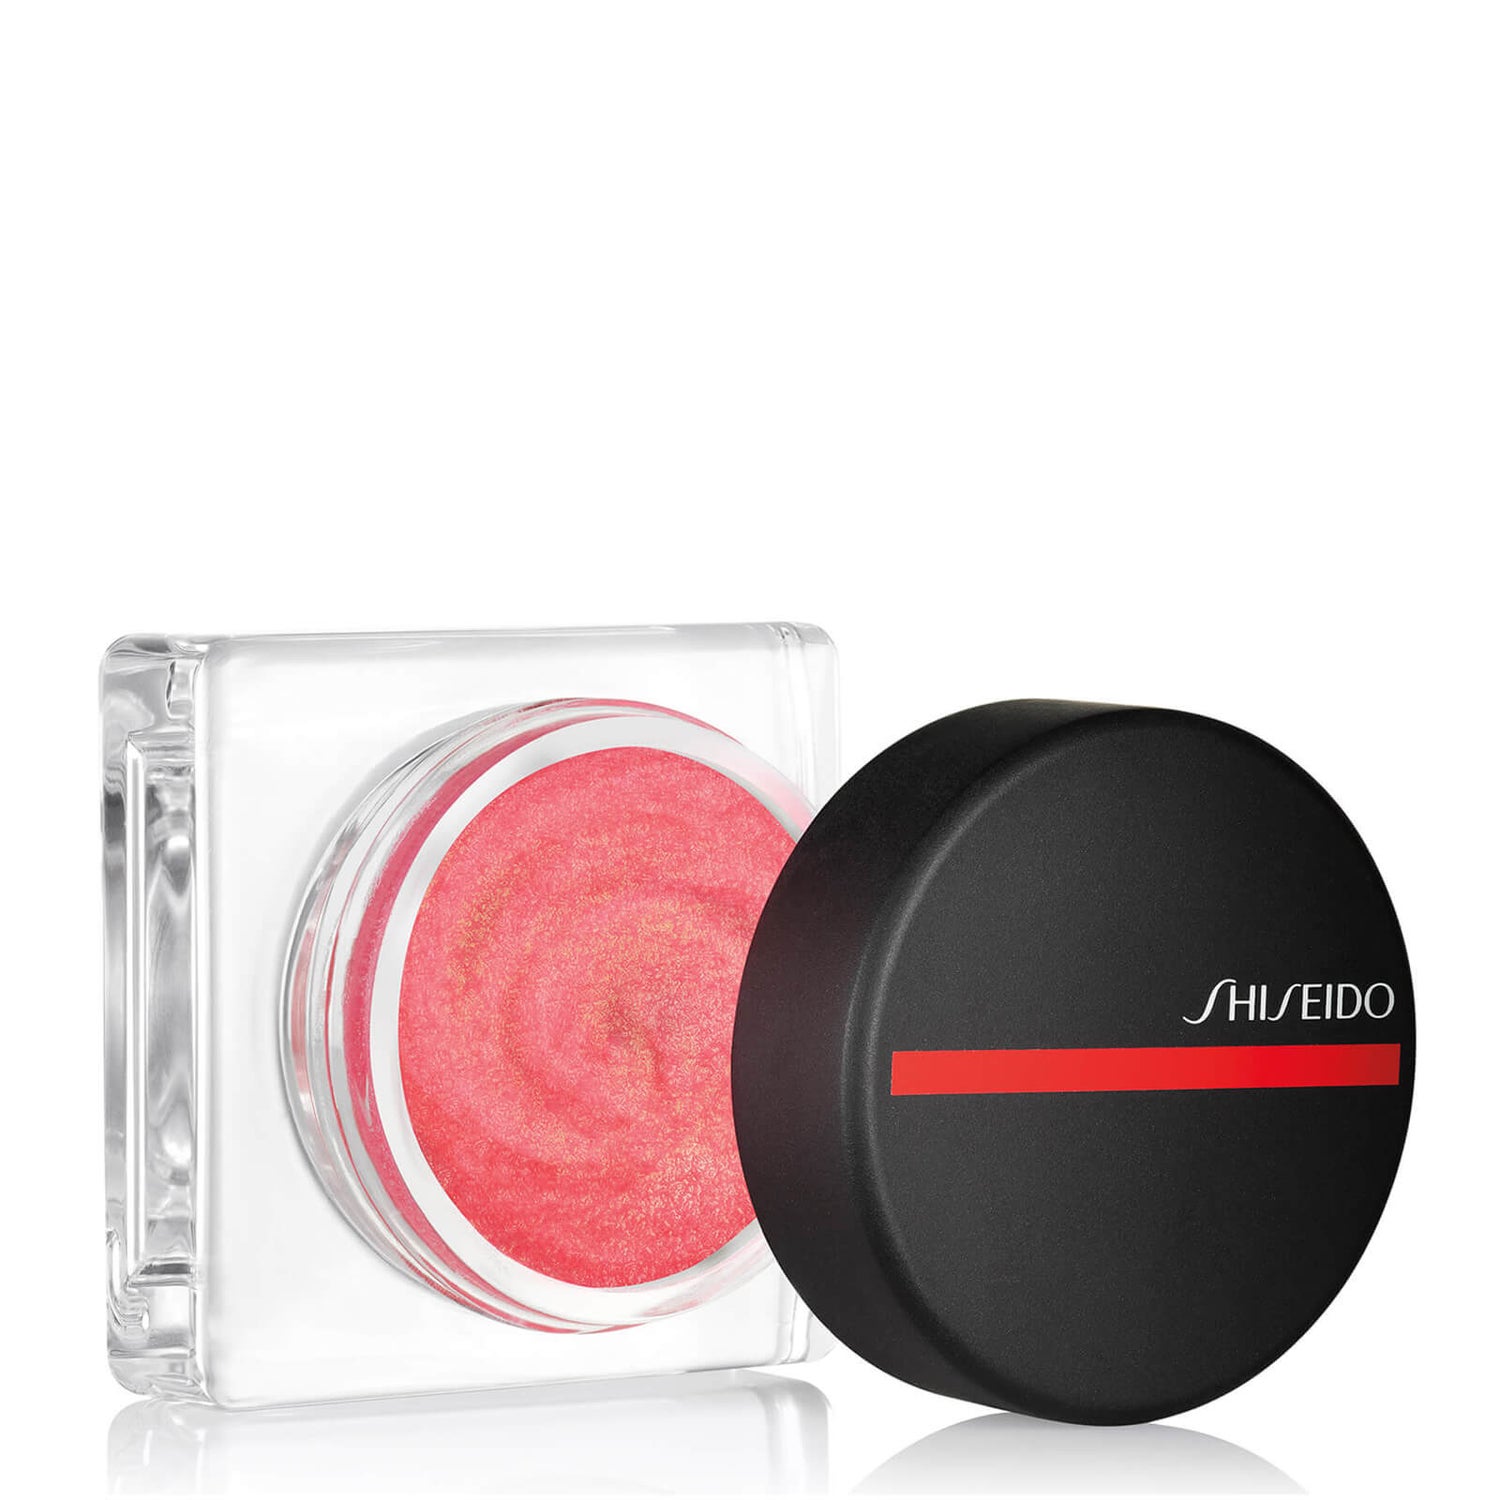 Shiseido Minimalist Whipped Powder Blush (flere nyanser)